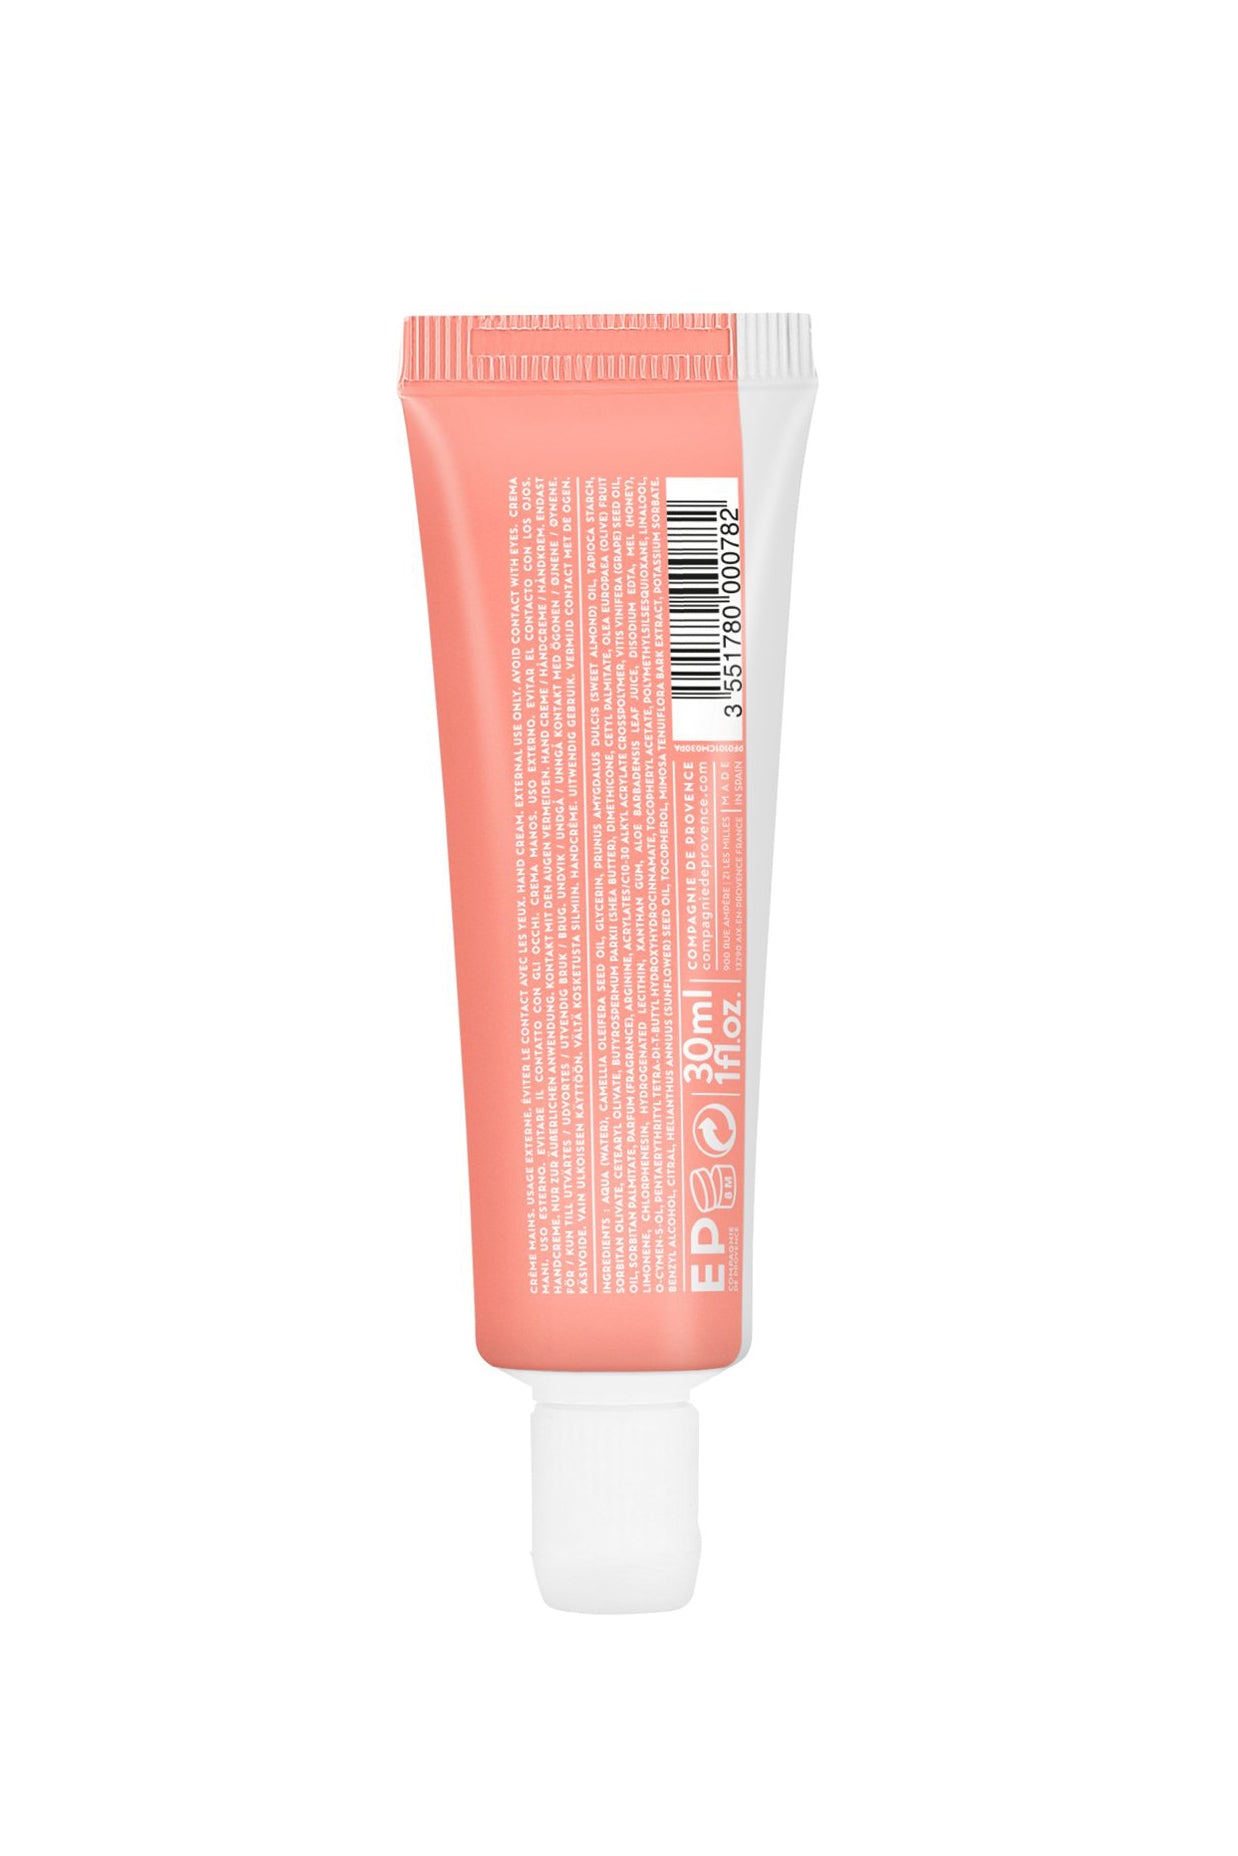 Cie Luxe :: Pink Grapefruit Hand Cream Travel Size